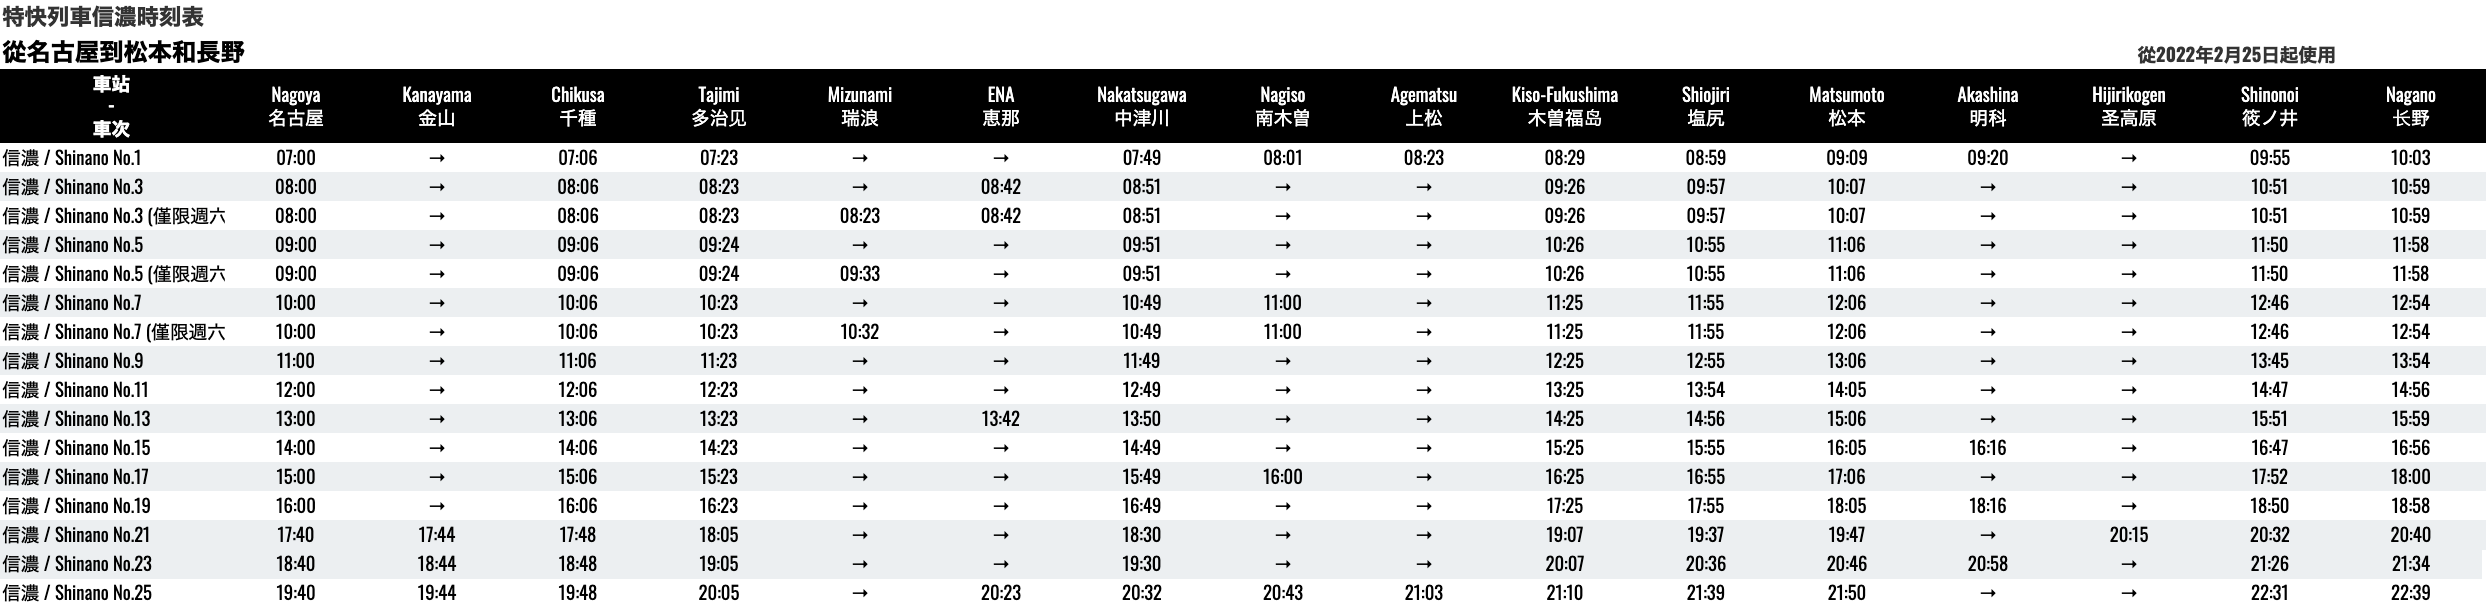 Shinano-Nagoya-Nagano-timetable